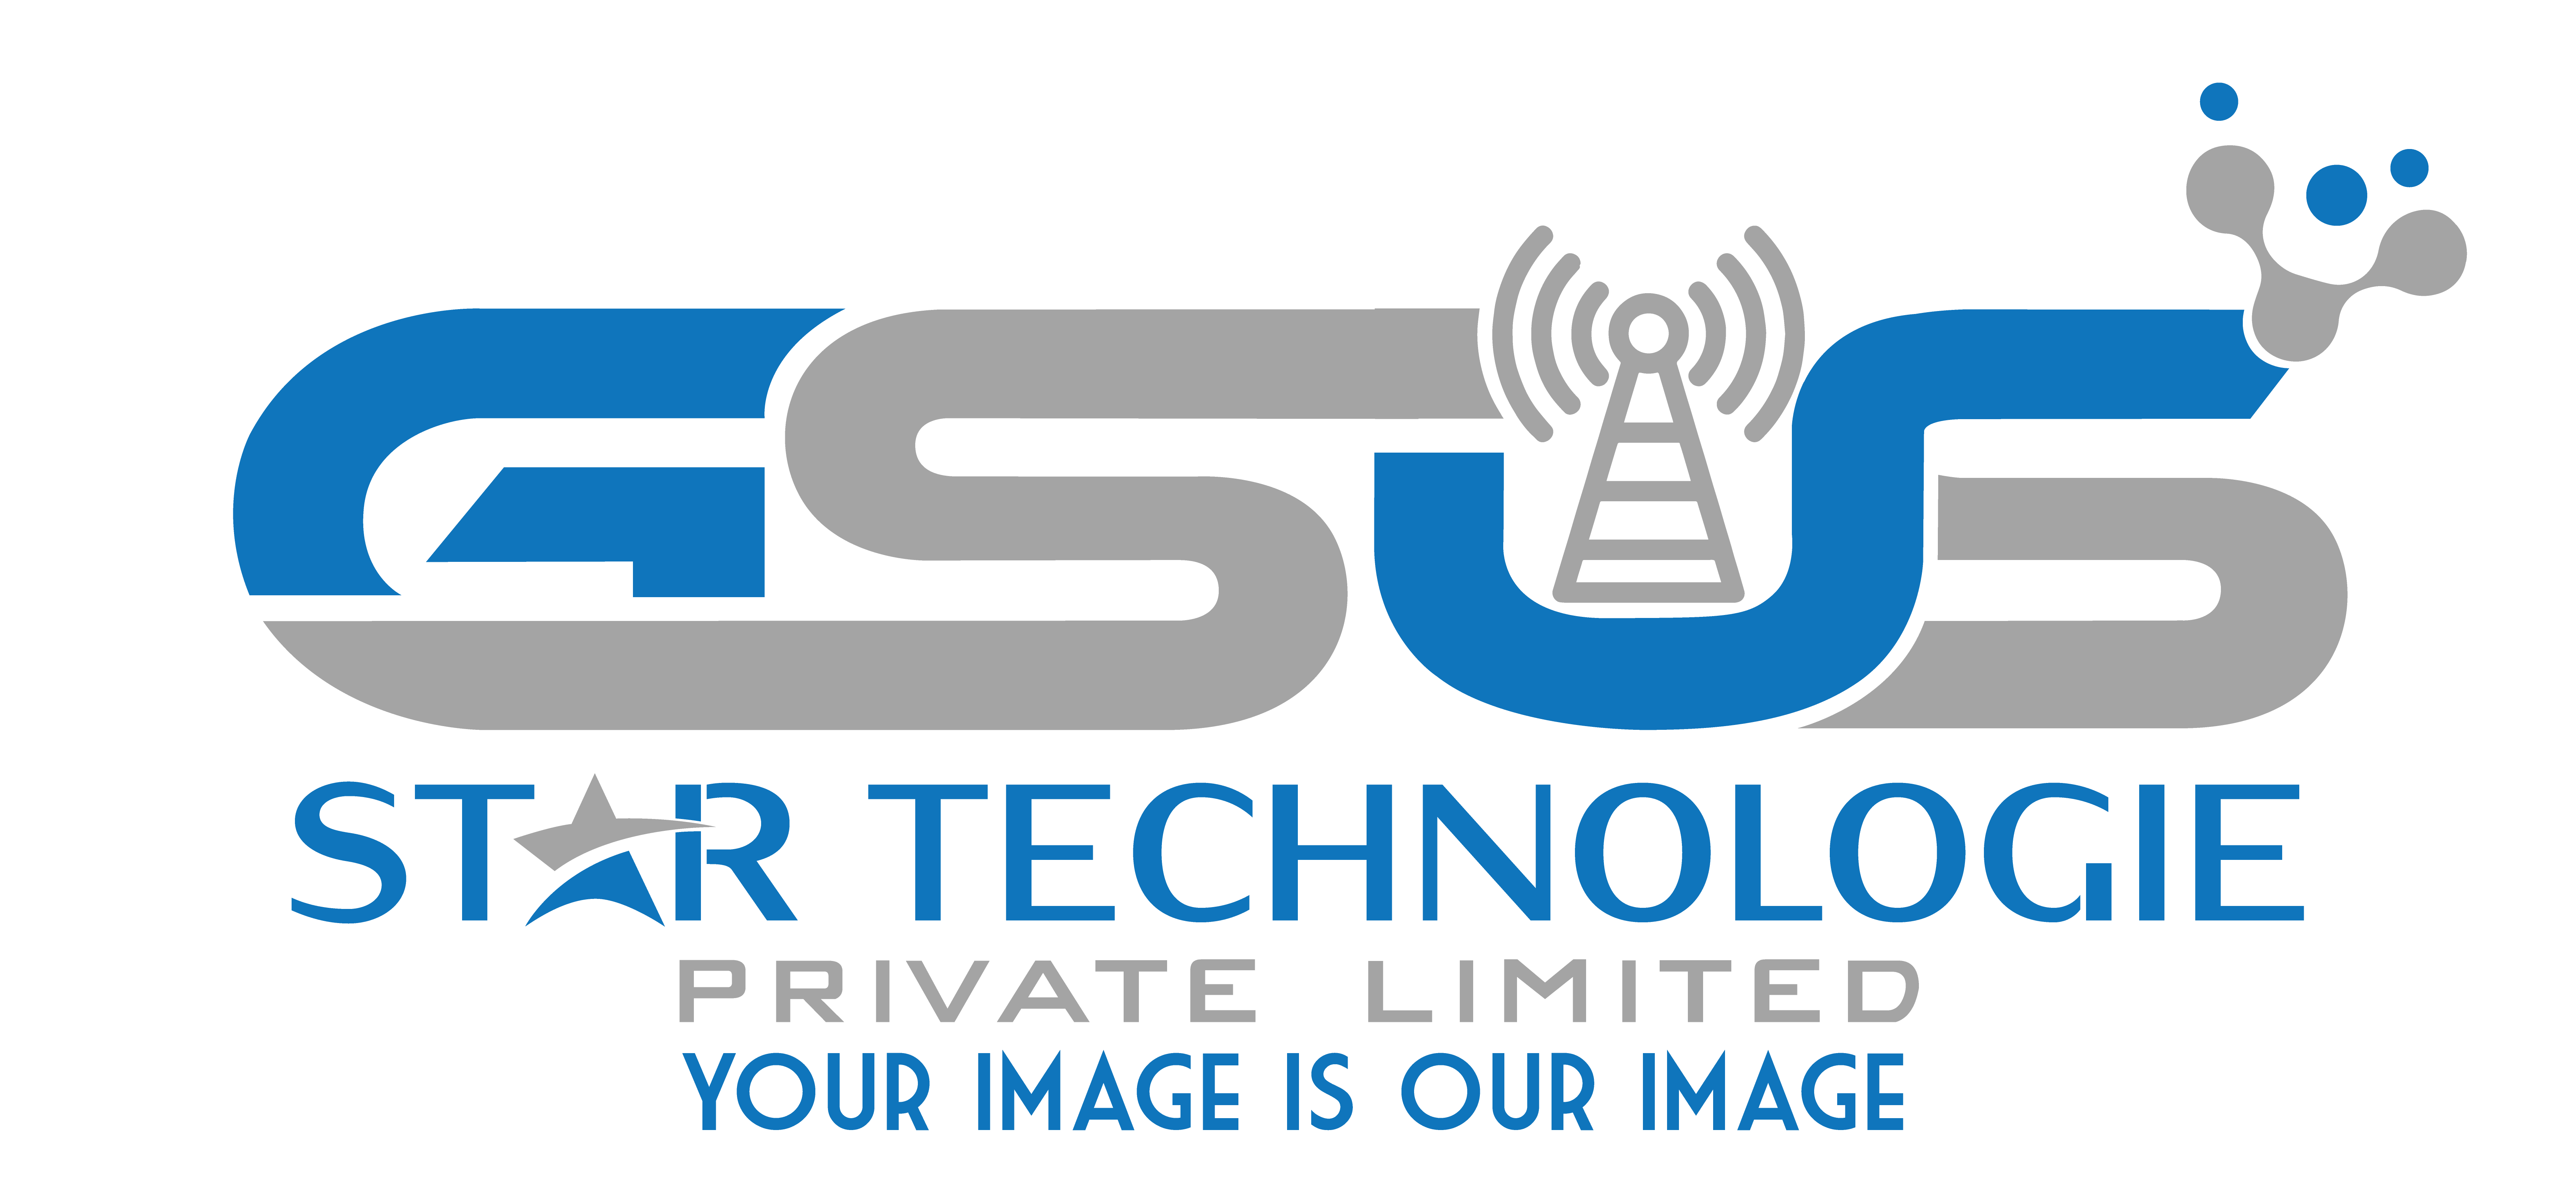 GSUS STAR TECHNOLOGIE PVT LTD